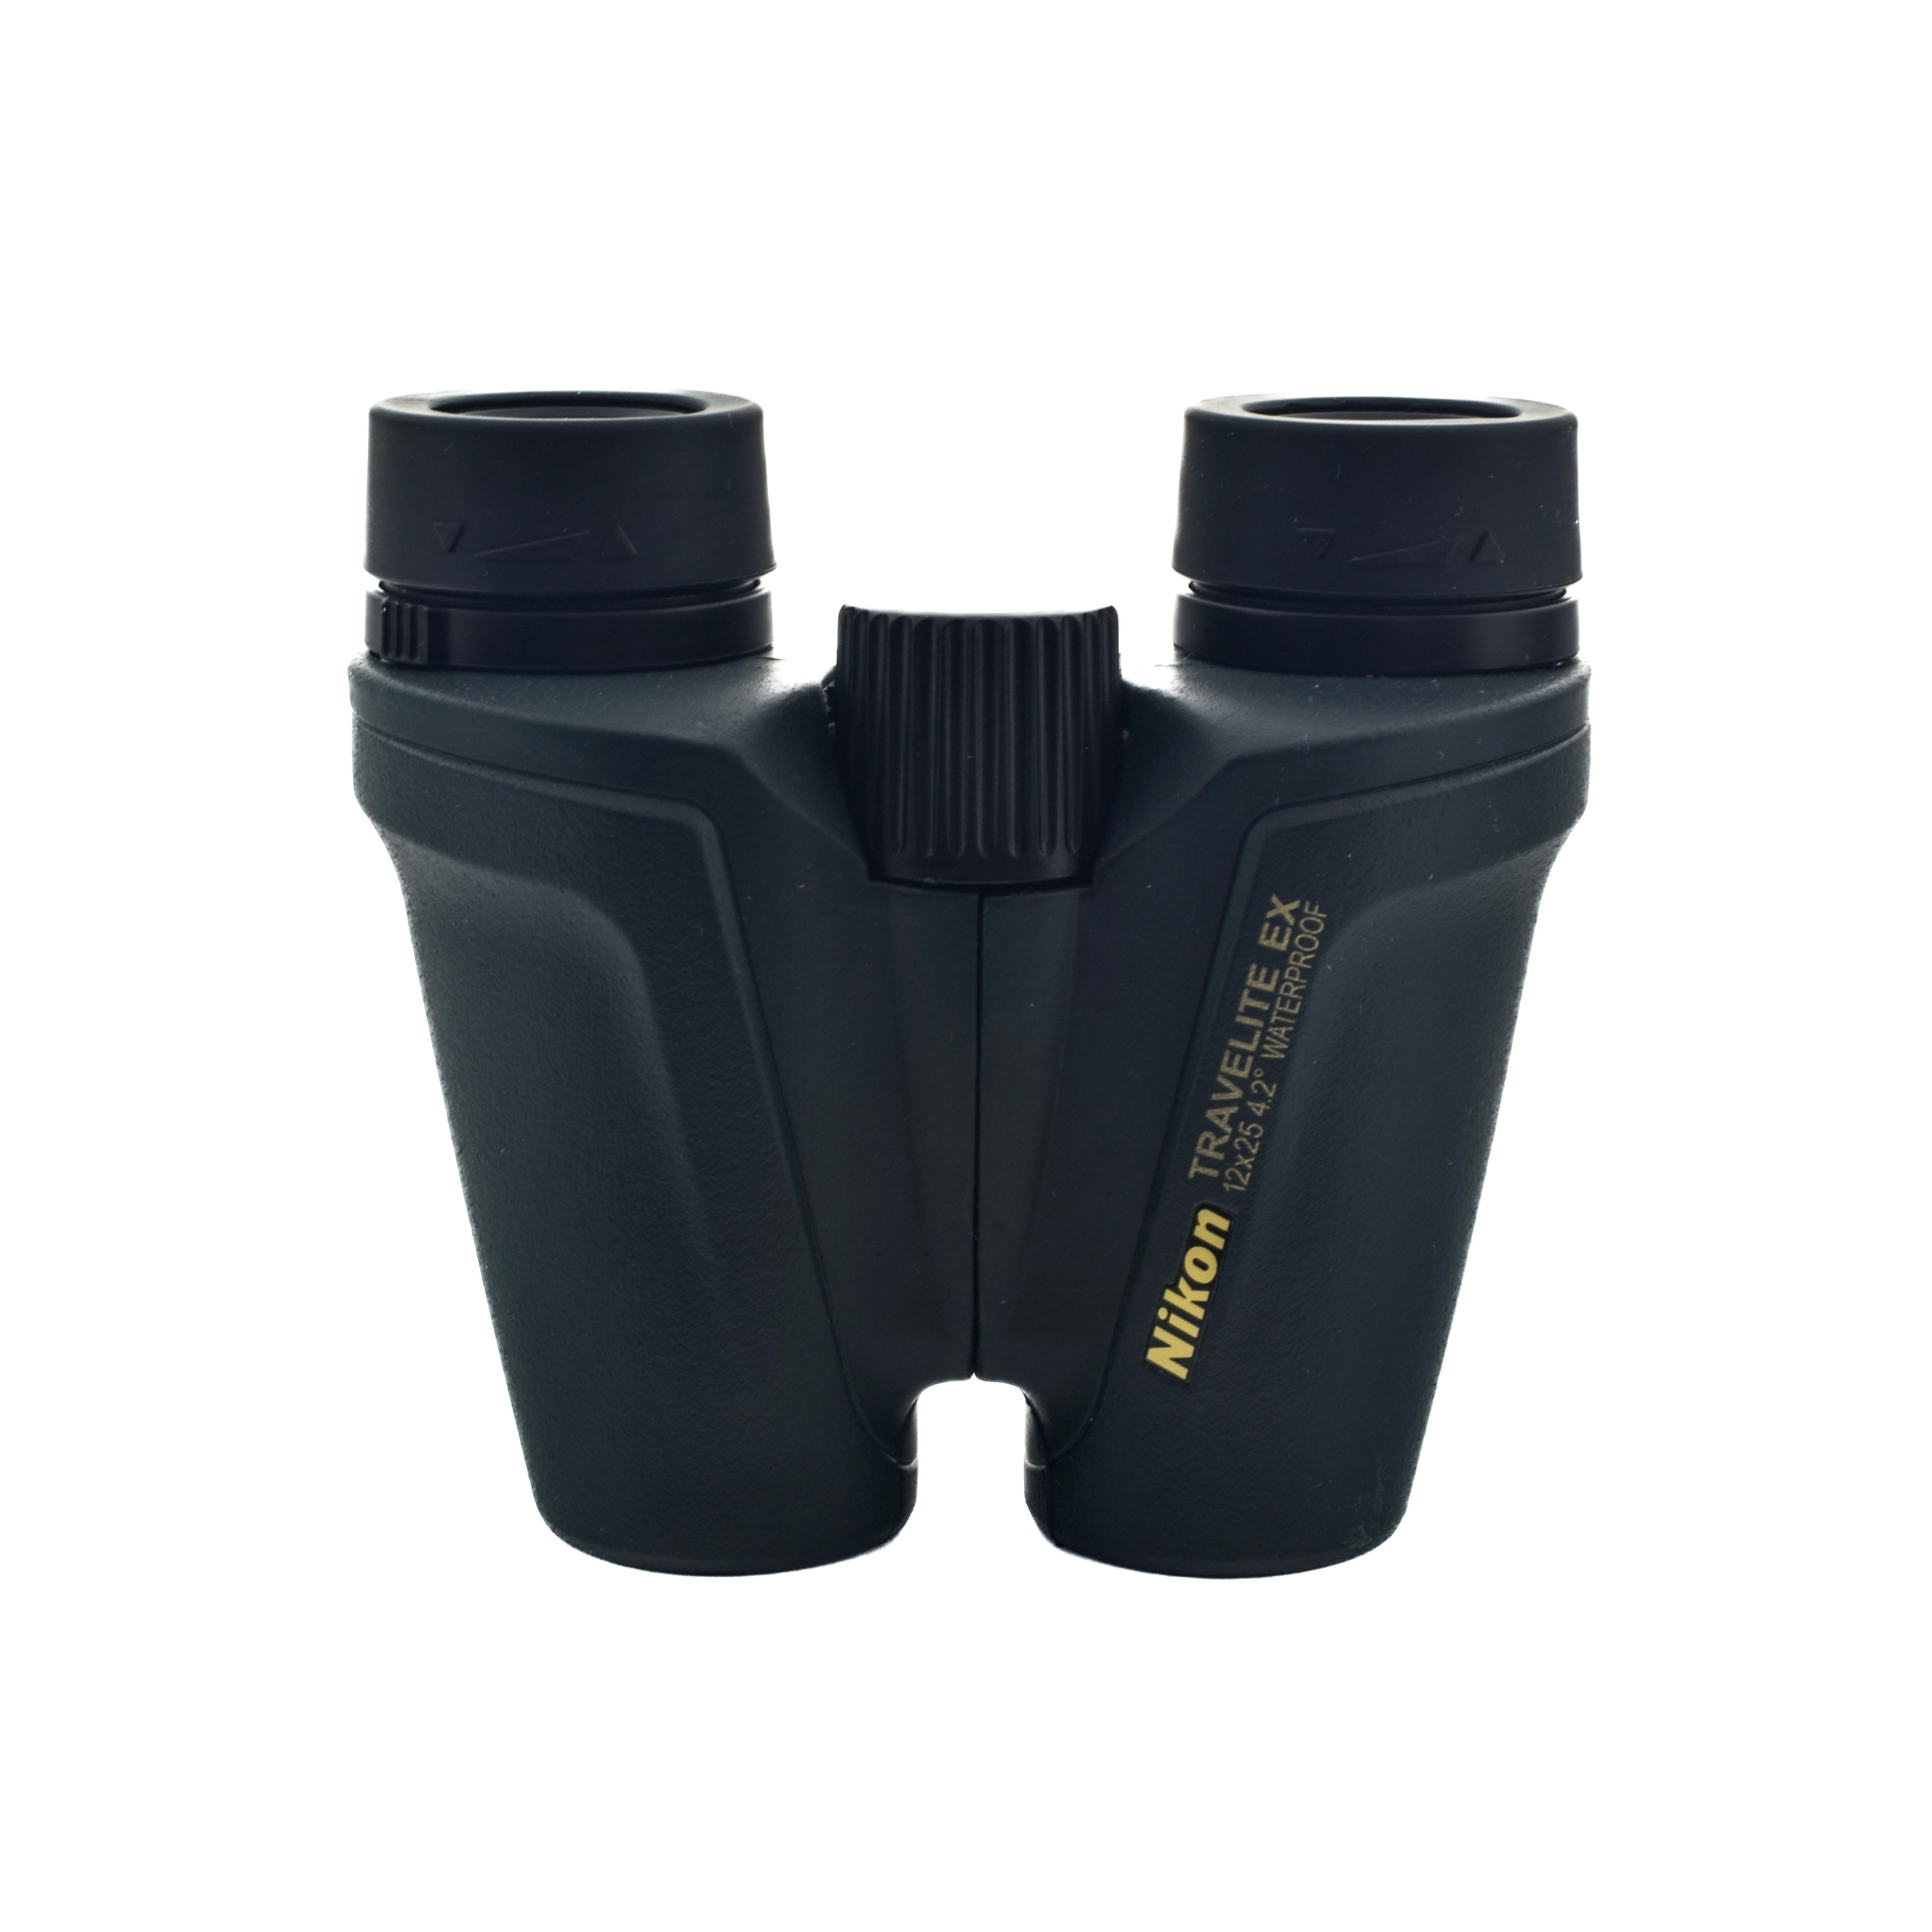 Nikon Travelite EX 12x25 V Binoculars (Black)